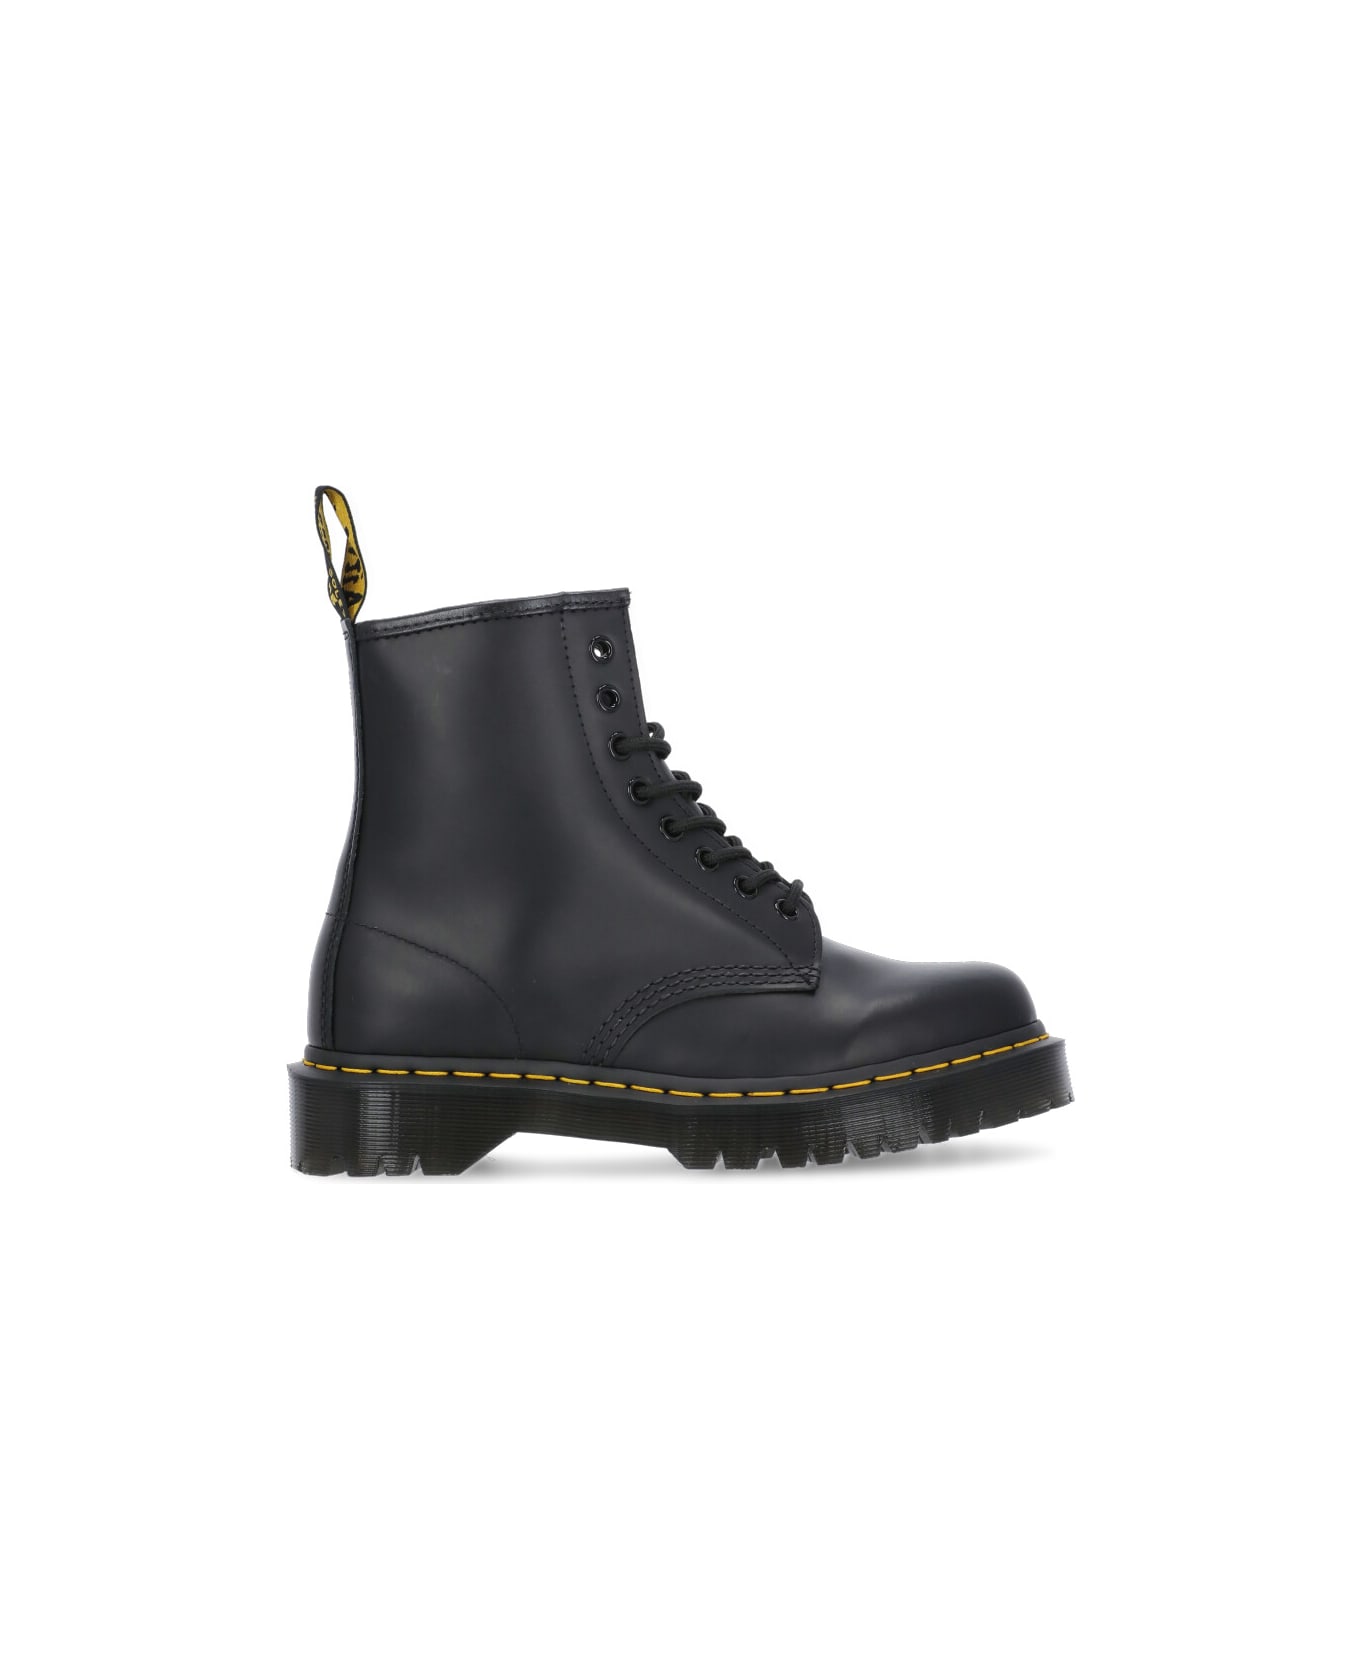 Dr. Martens 1460 Bex Boots - Black